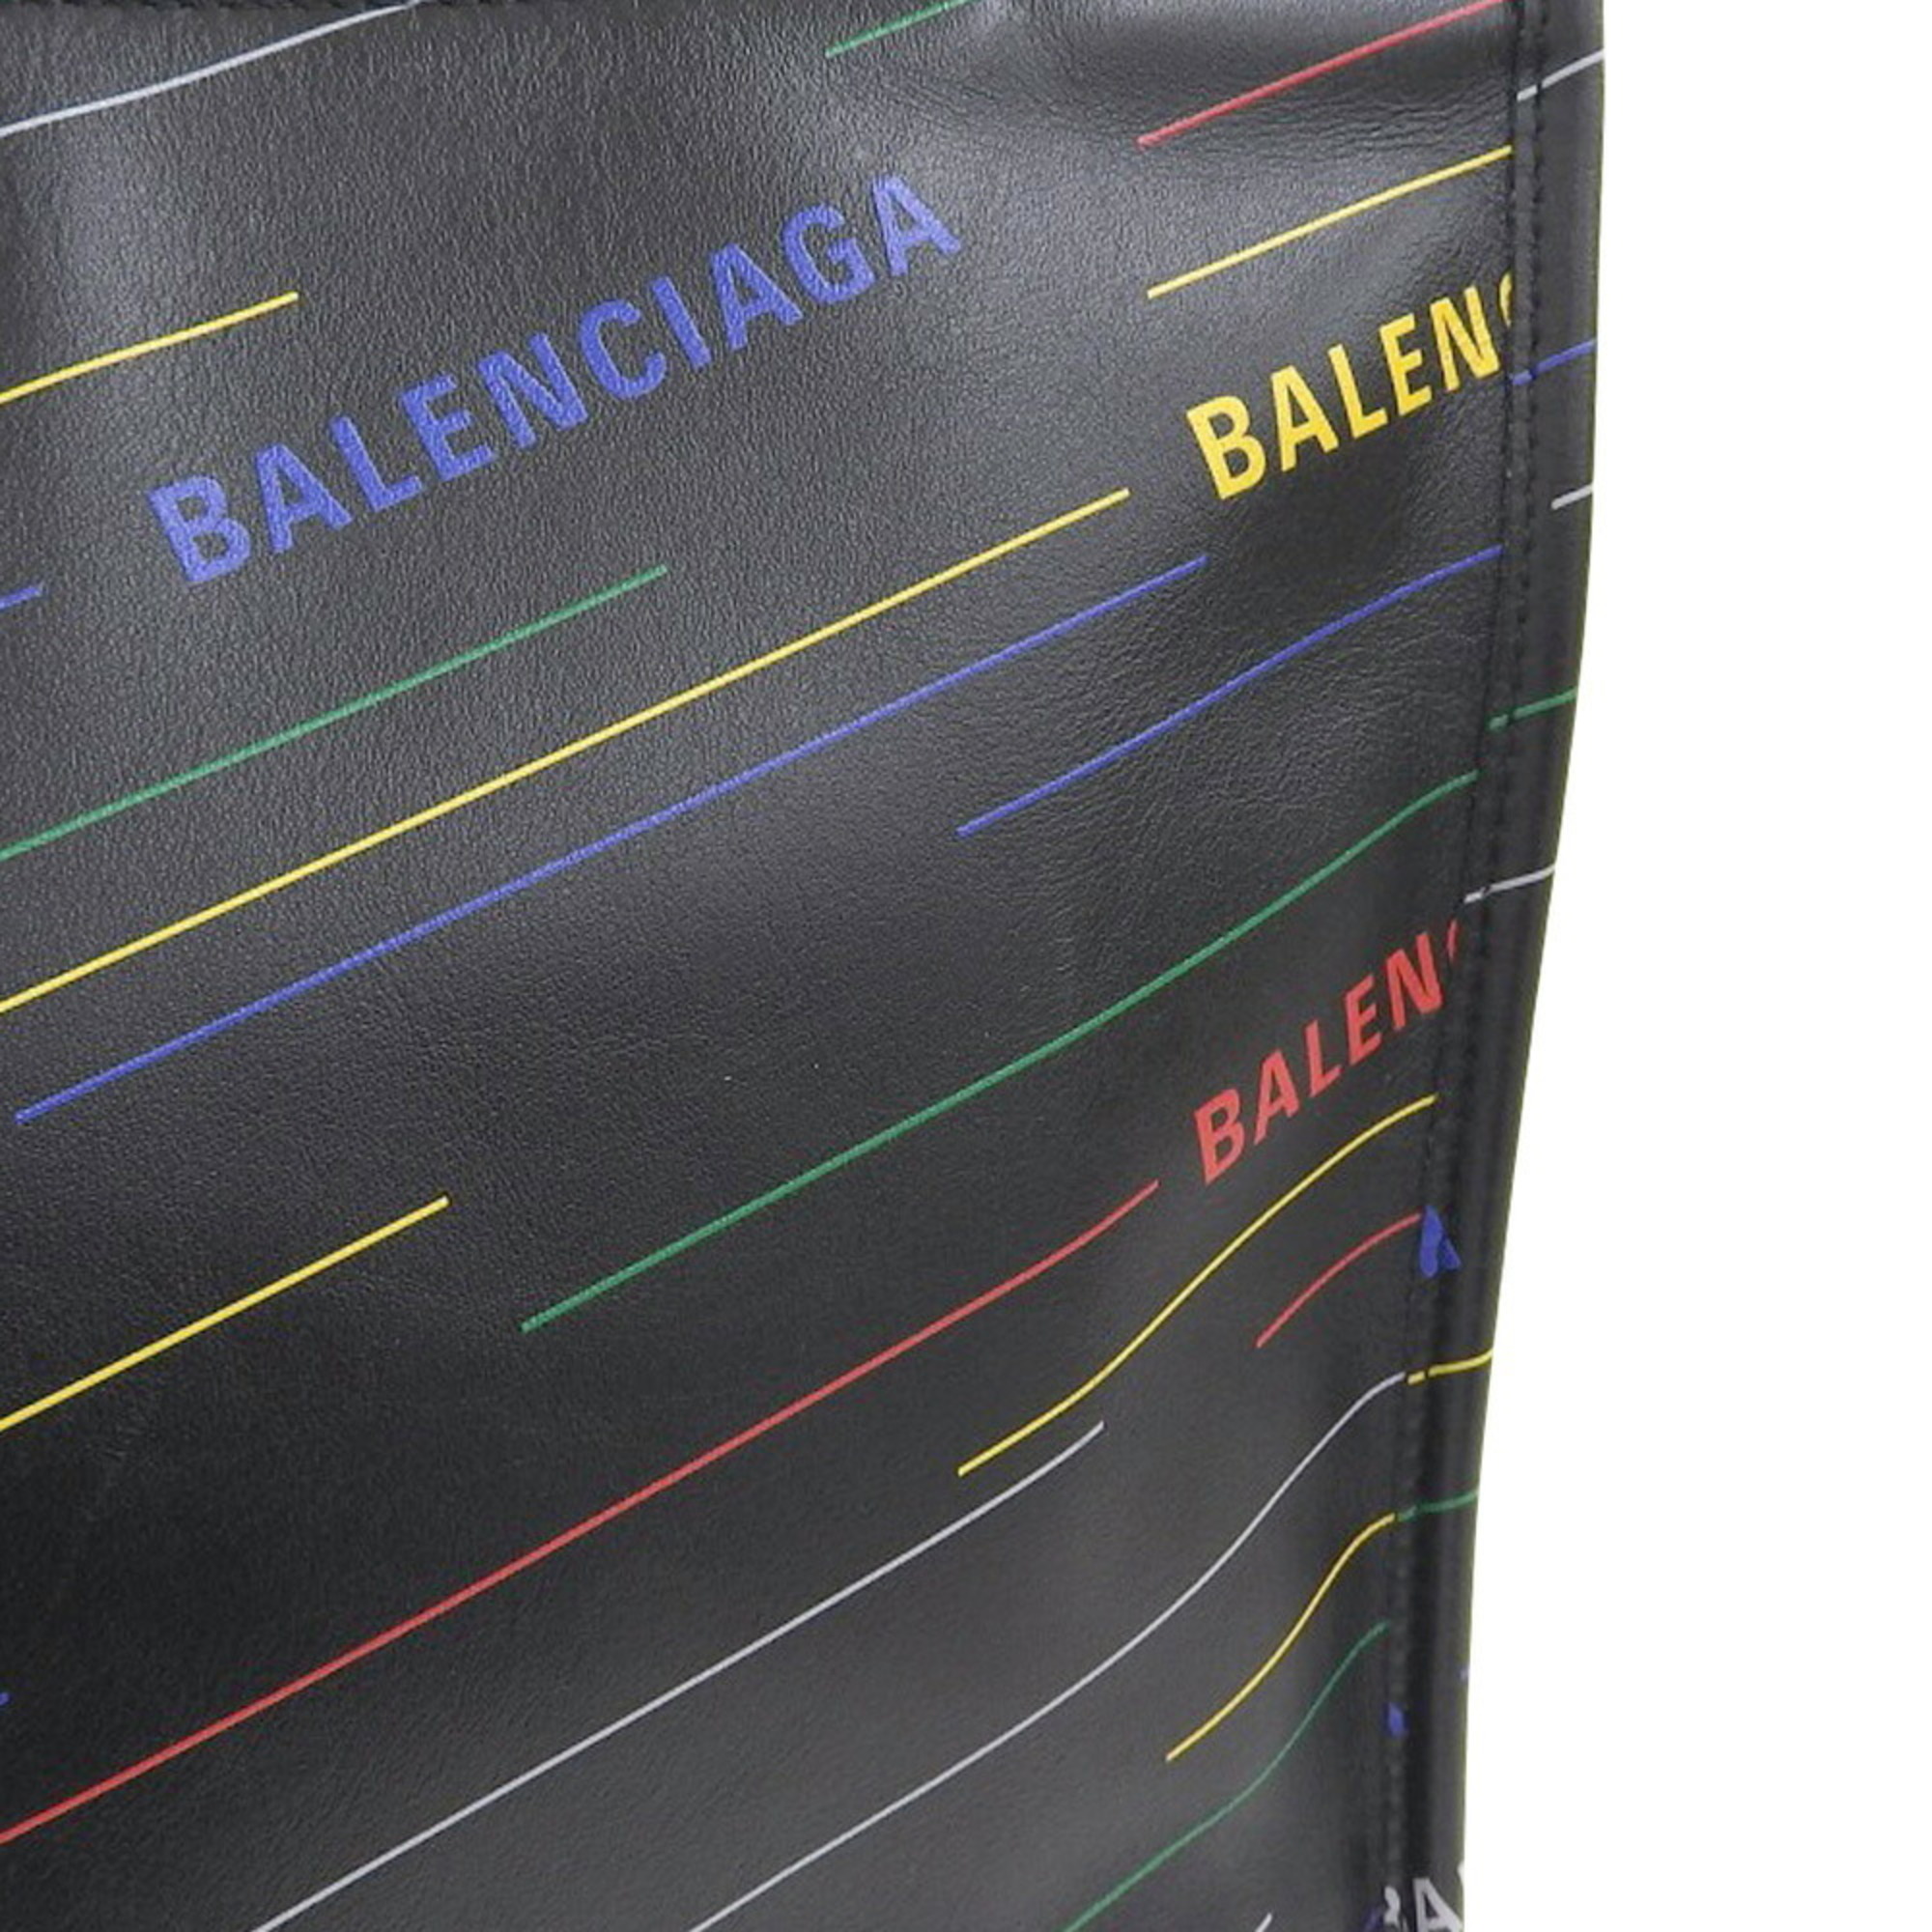 BALENCIAGA Market Shopper 552870 0XT0N 1080 Tote Hand Bag Leather Black